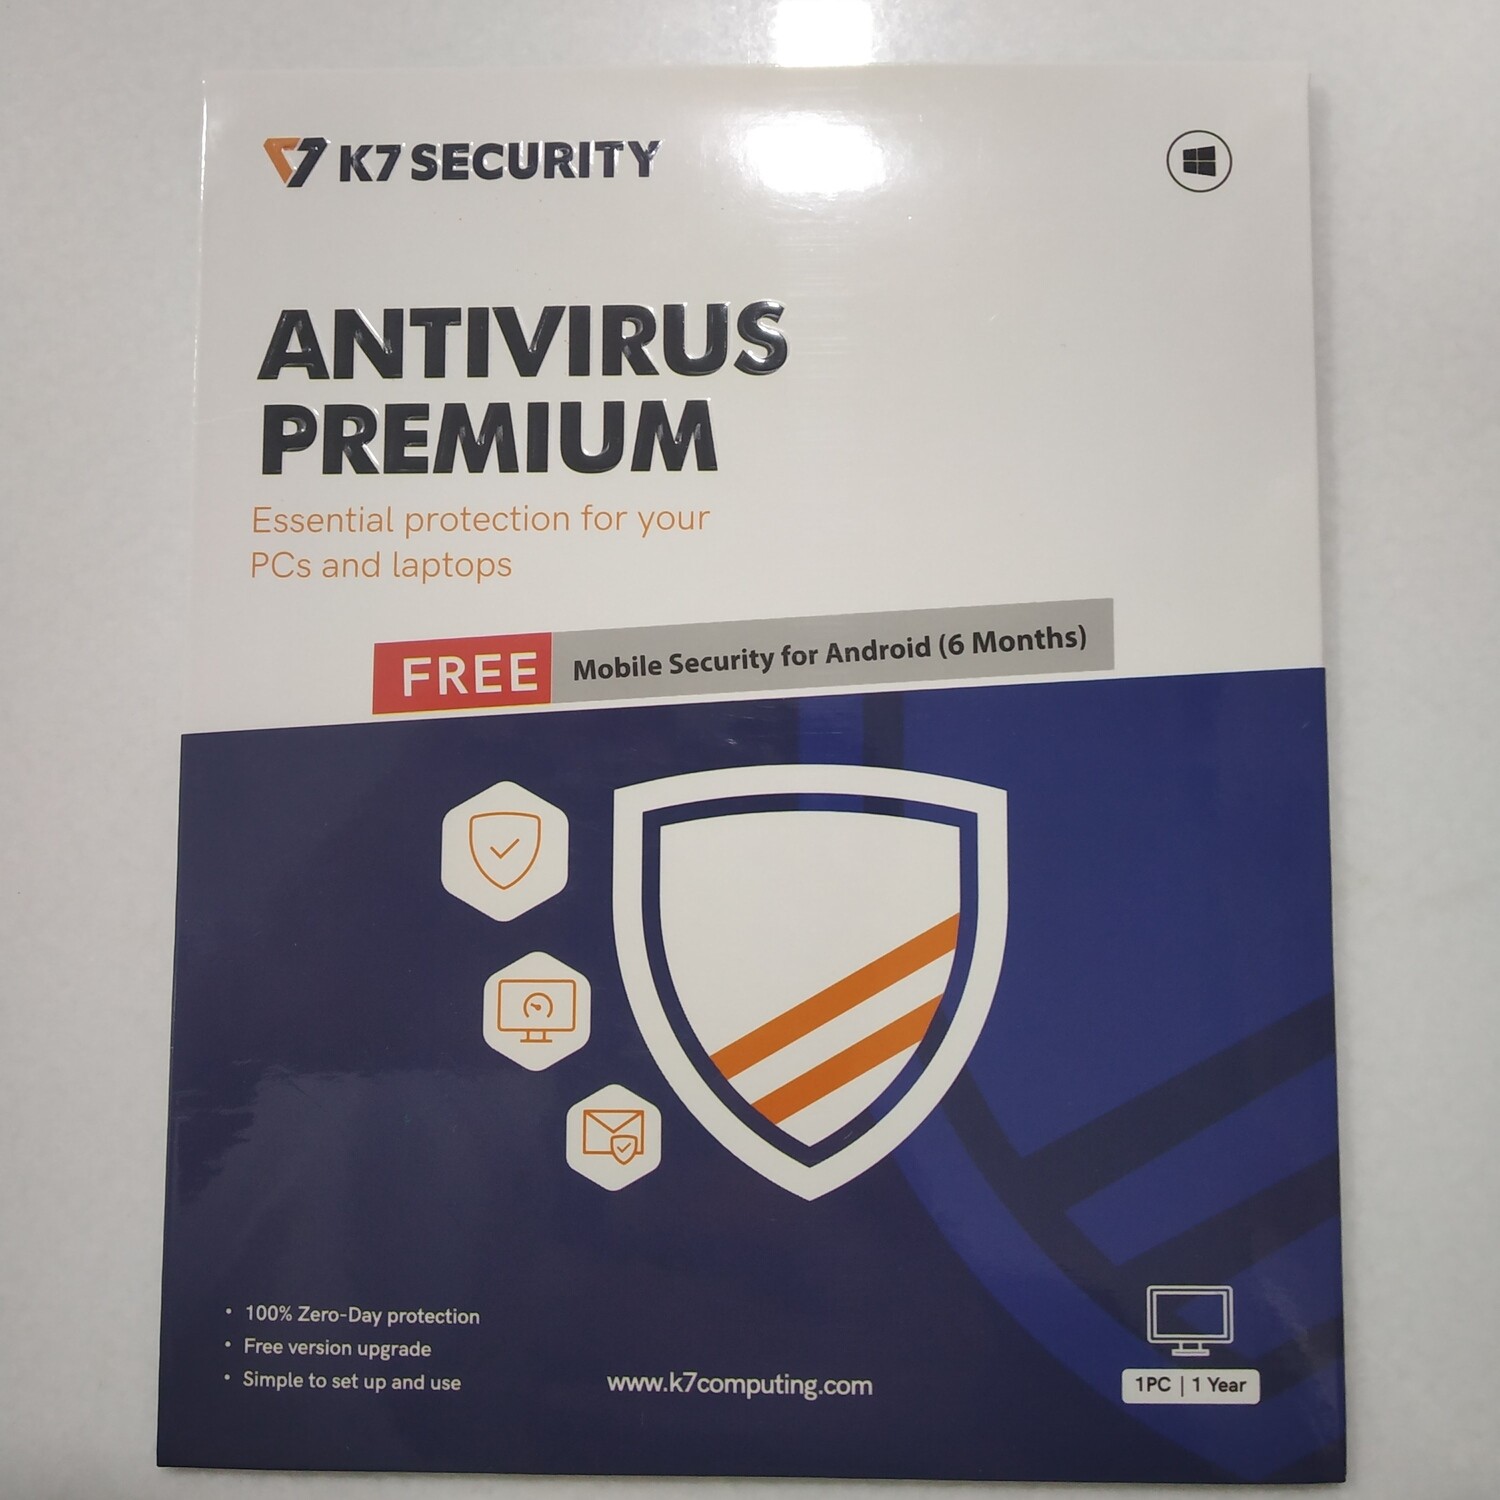 k7 antivirus premium download windows 10